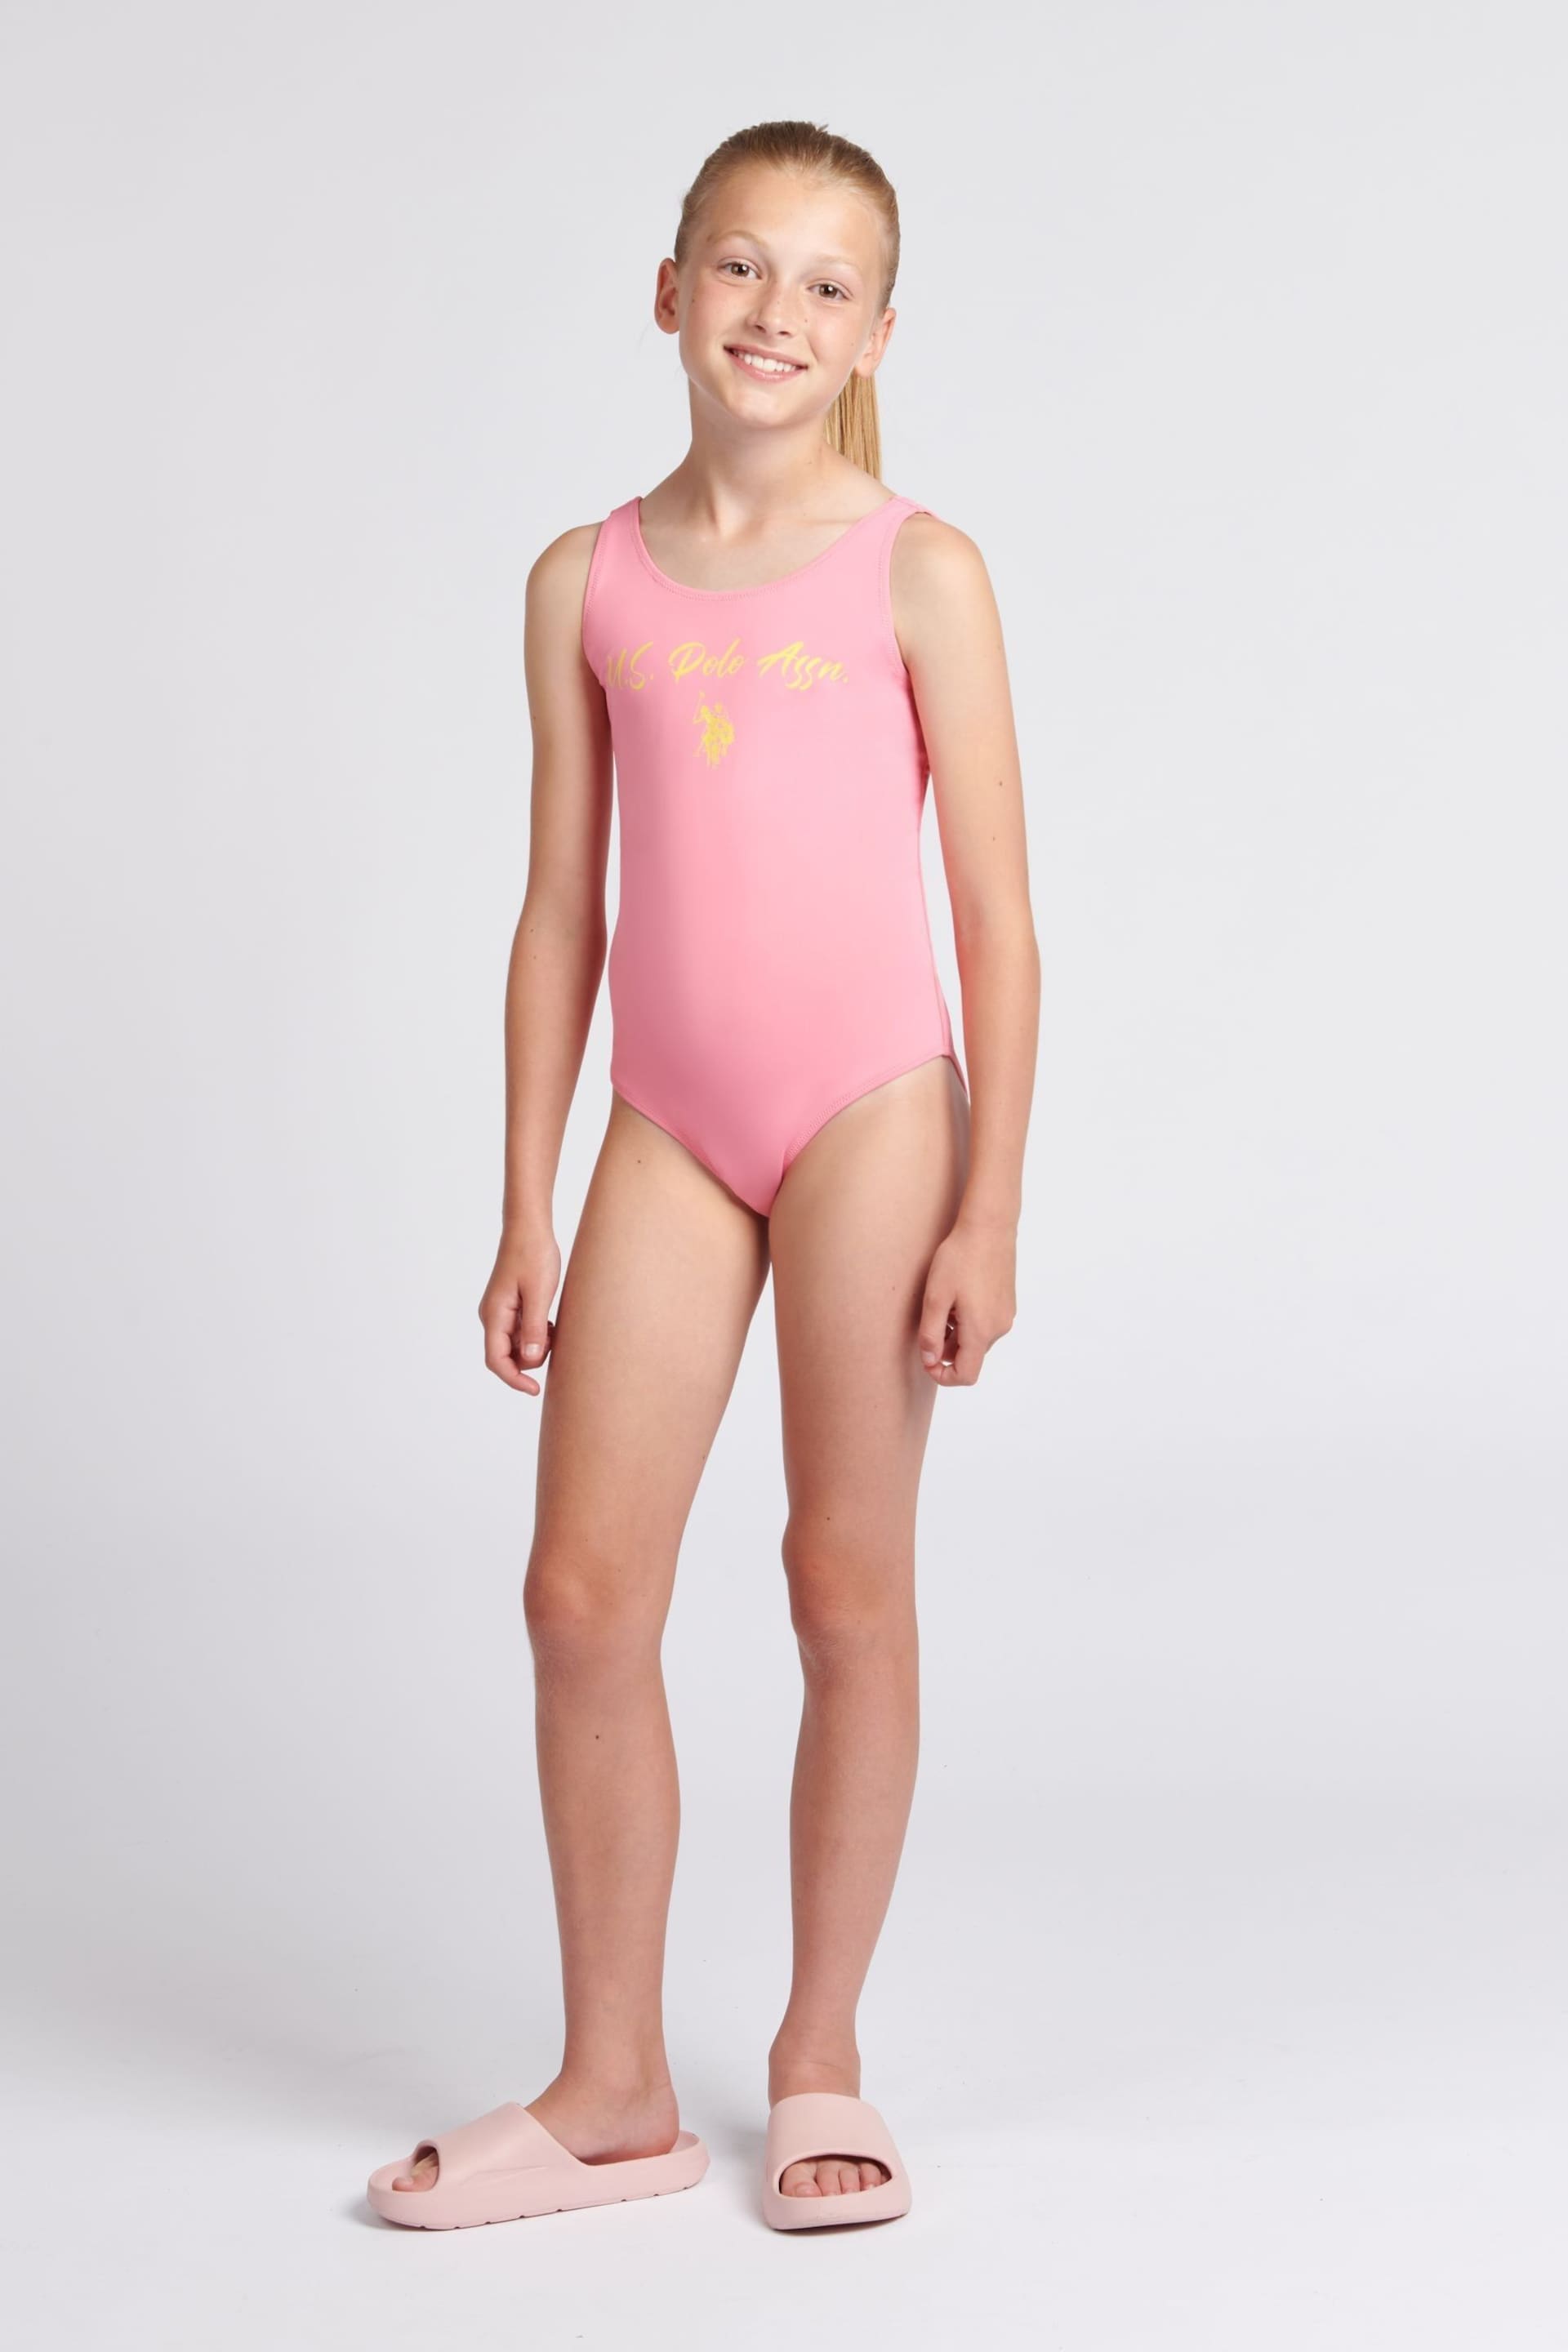 U.S. Polo Assn. Pink Script Swimsuit - Image 3 of 7